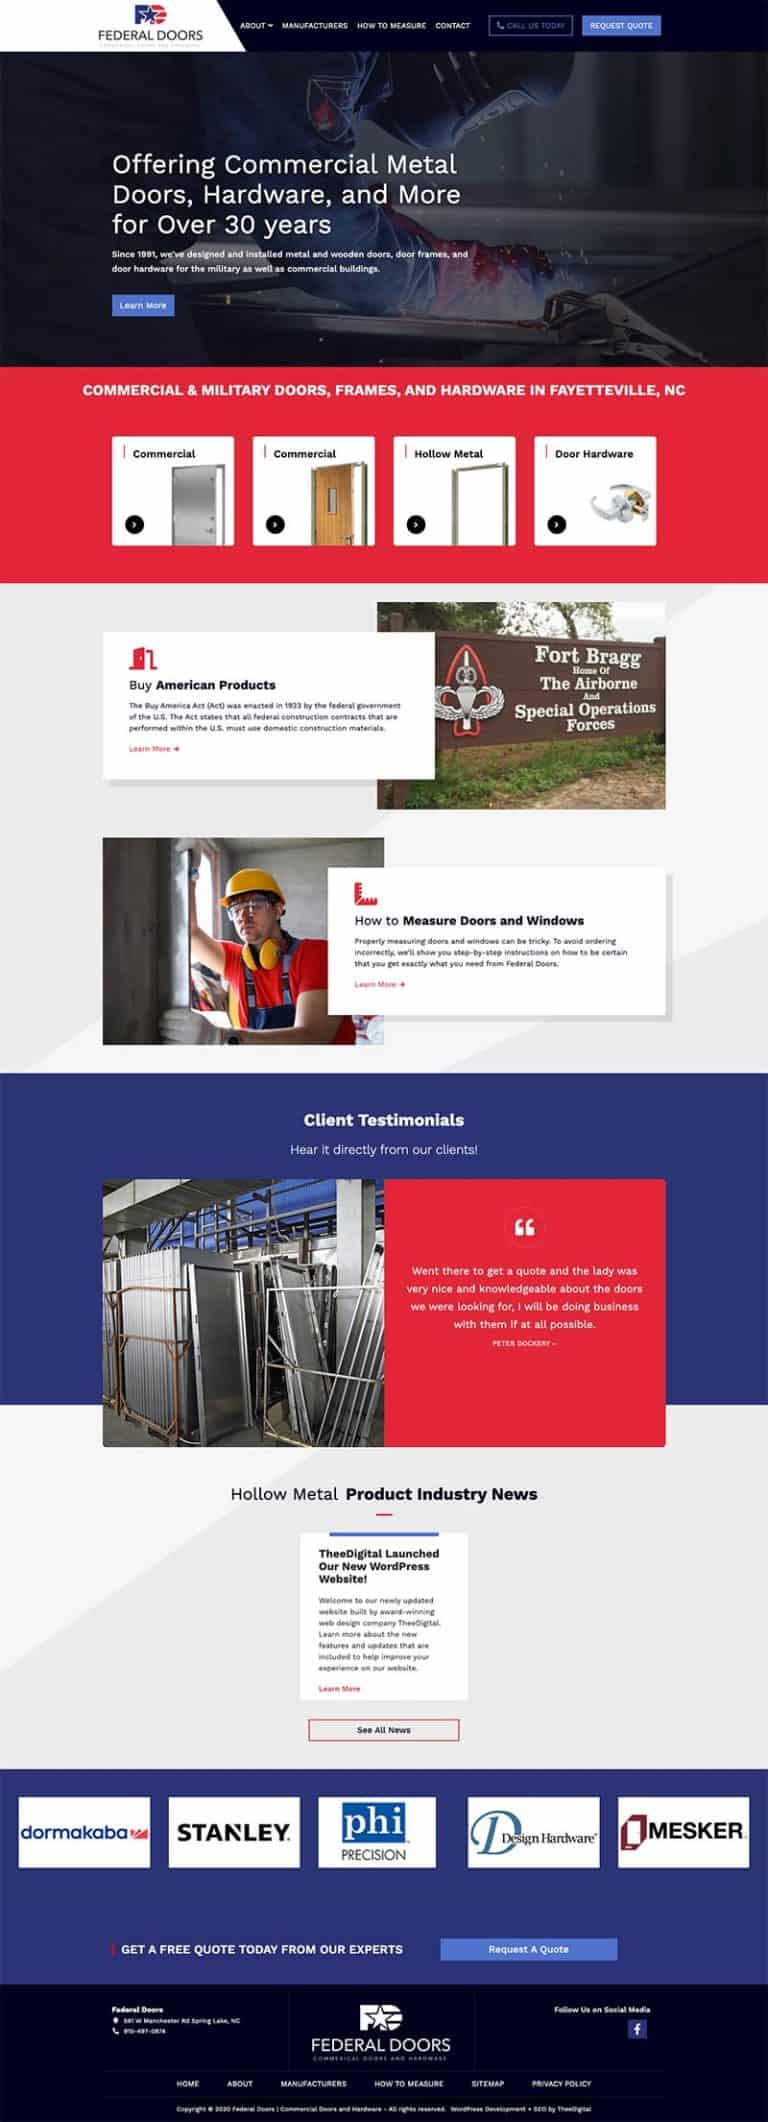 Custom Web Design for a Construction Supply Company